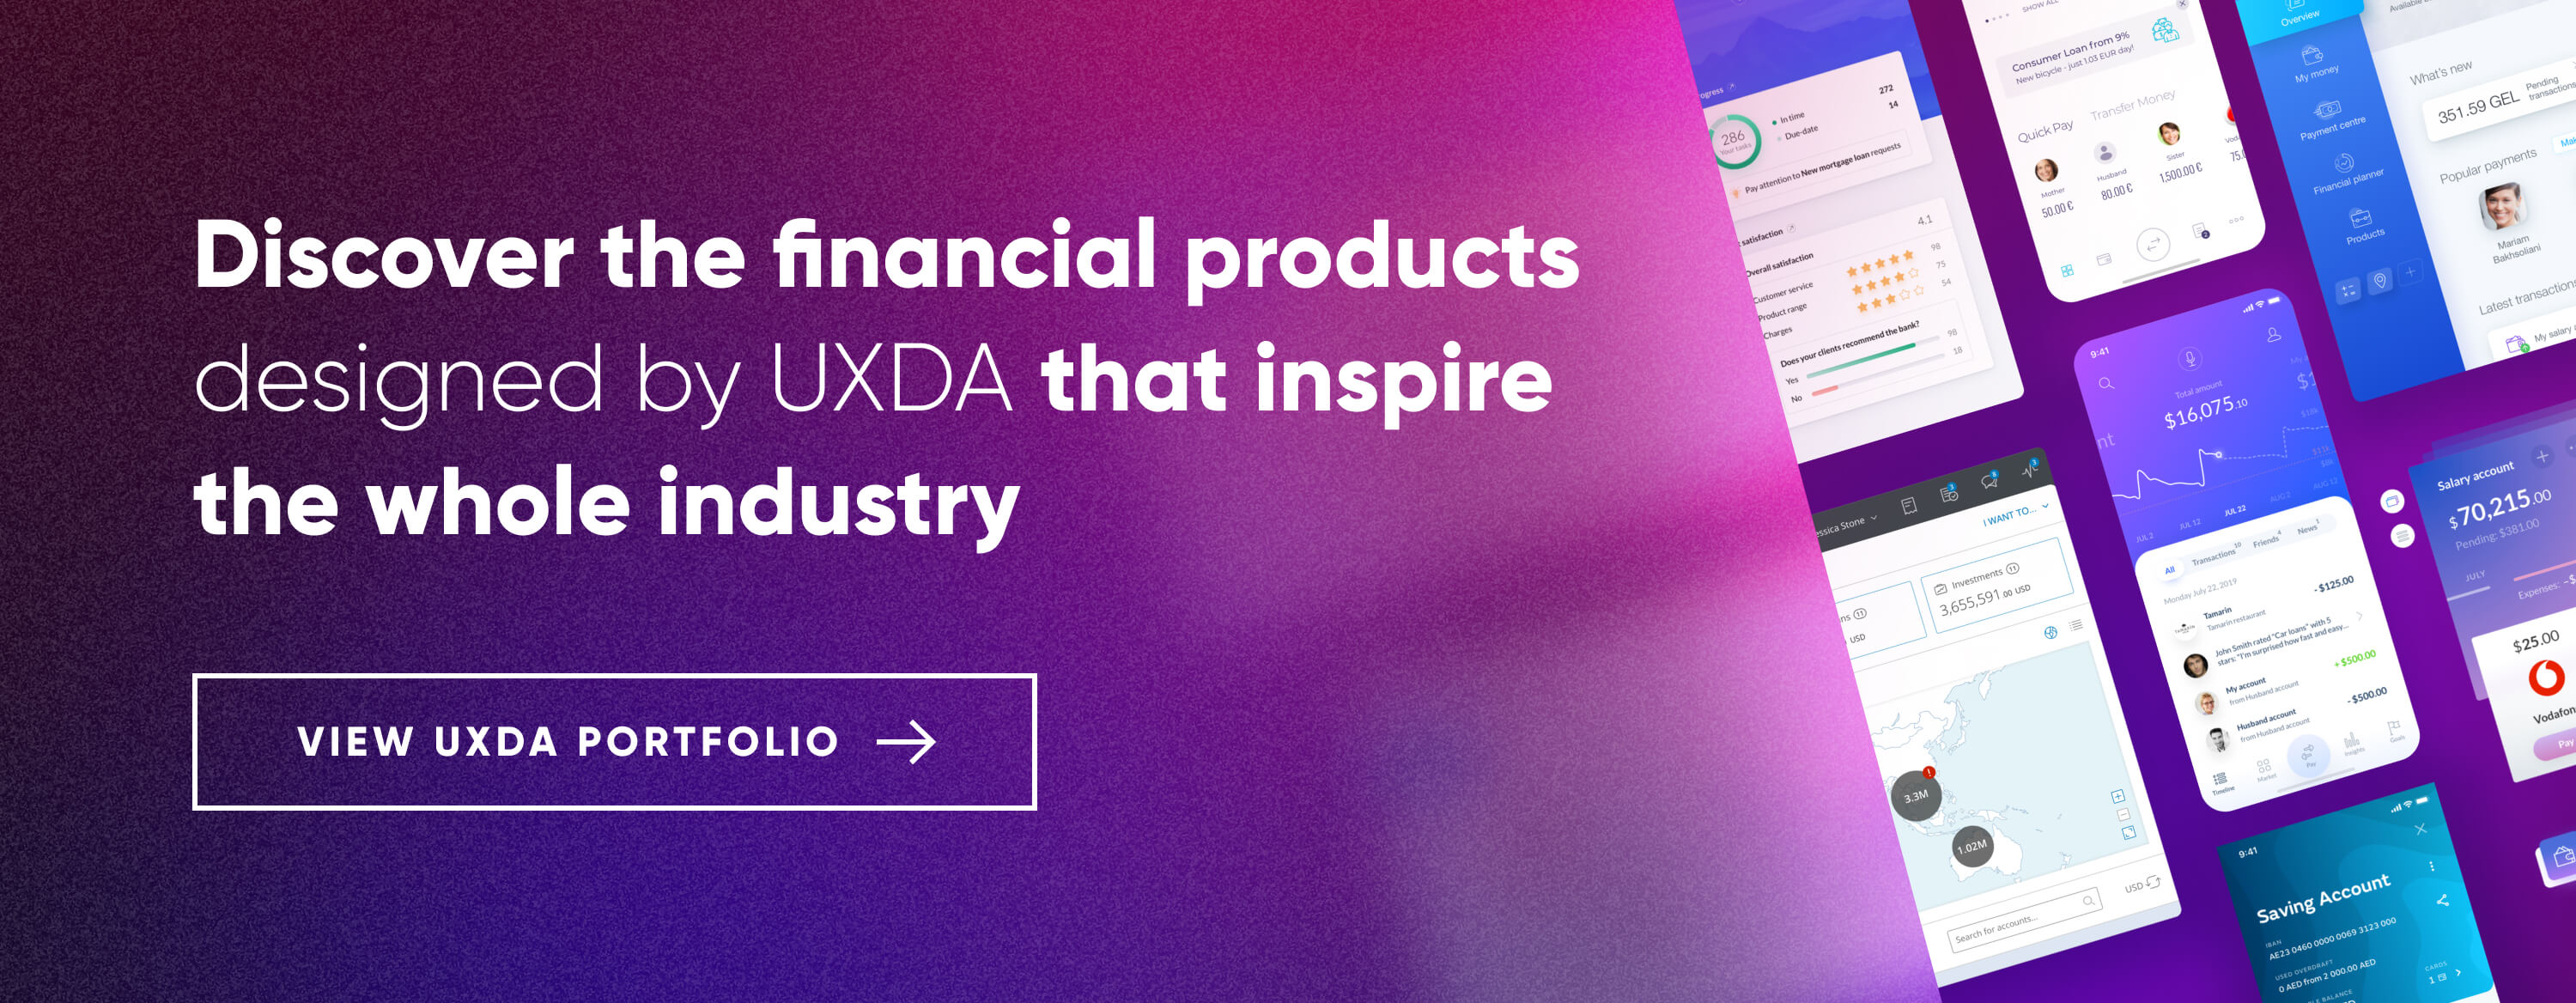 uxda-portfolio-financial-digital-product-inspire-industry-ux-1669632964.jpg